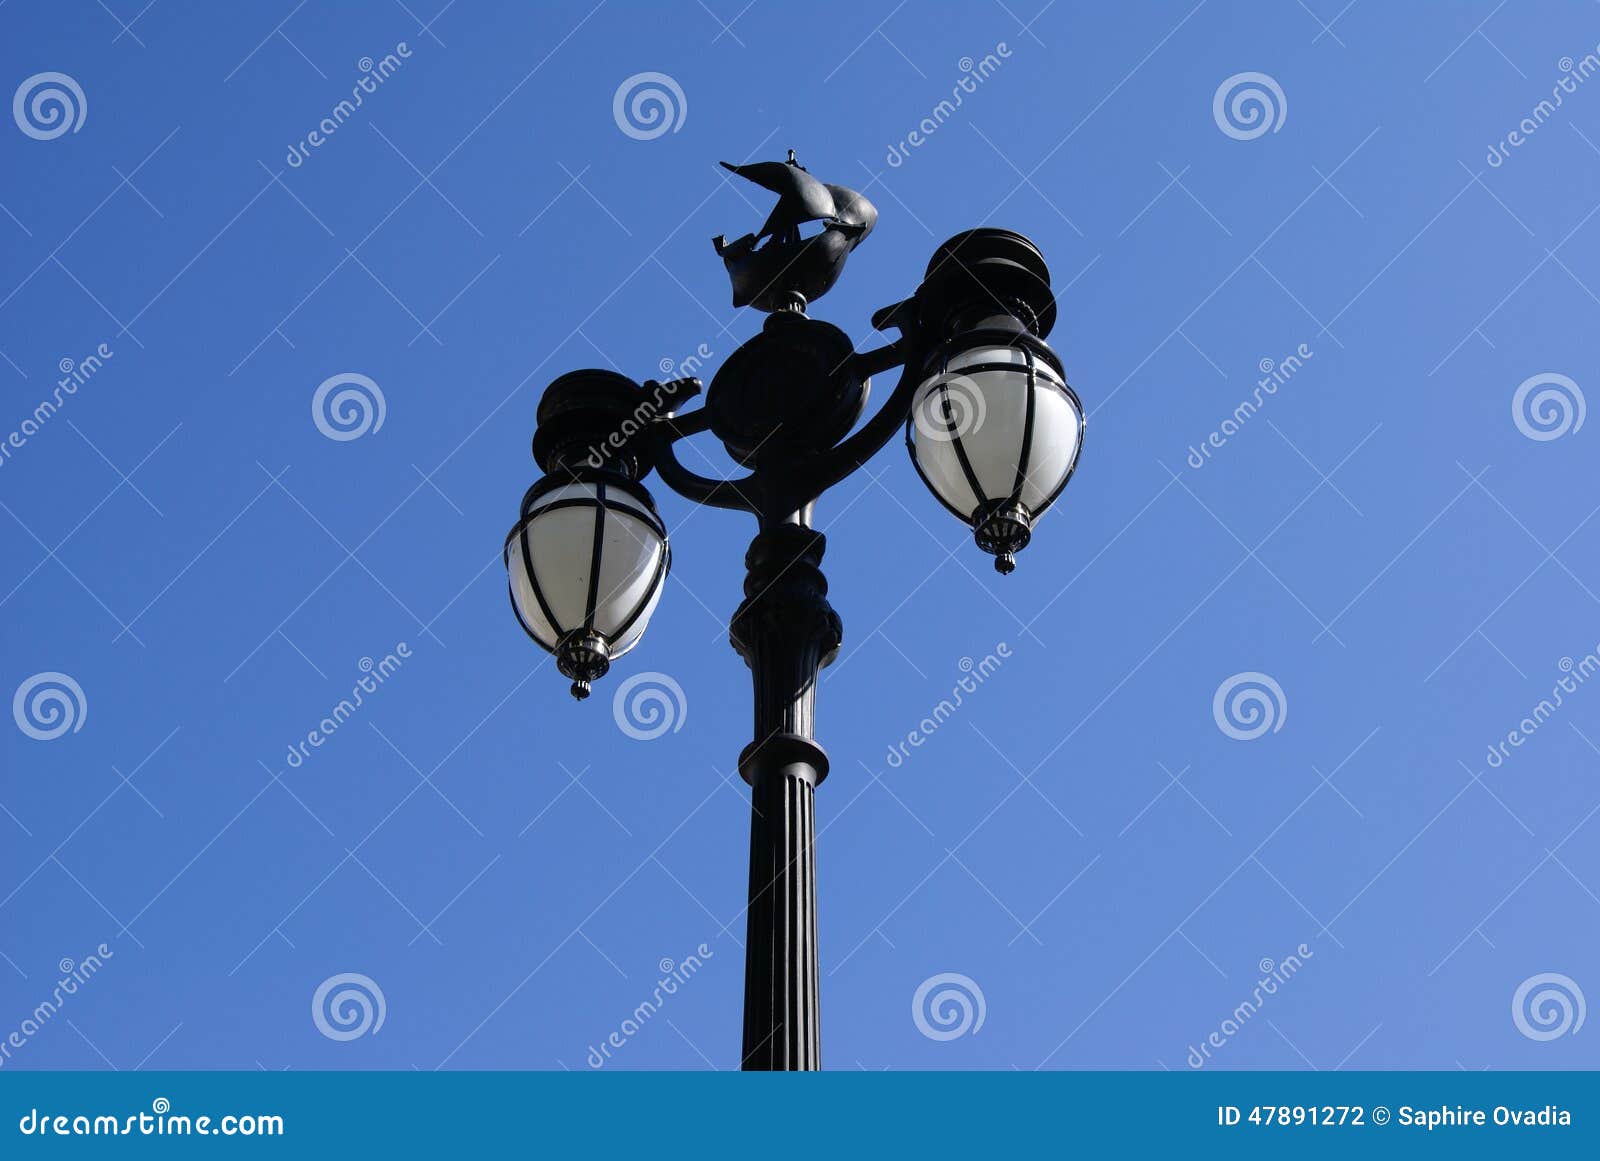 orante street lamp or light, london, england